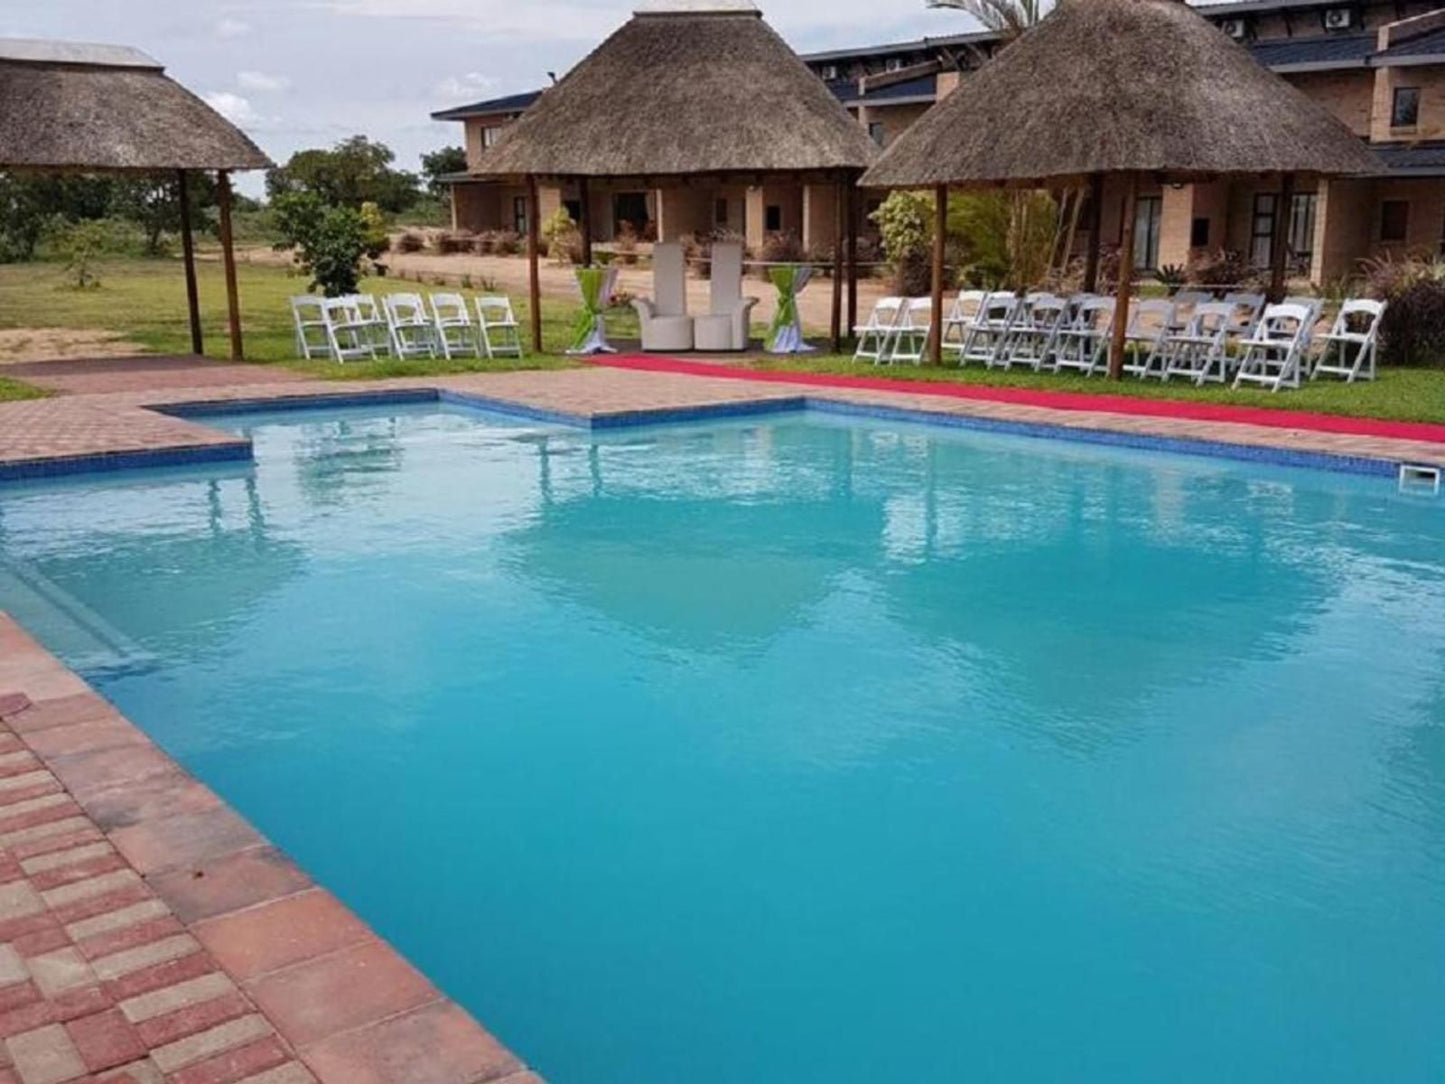 Hoyohoyo Acorns Lodge Acornhoek Mpumalanga South Africa Swimming Pool